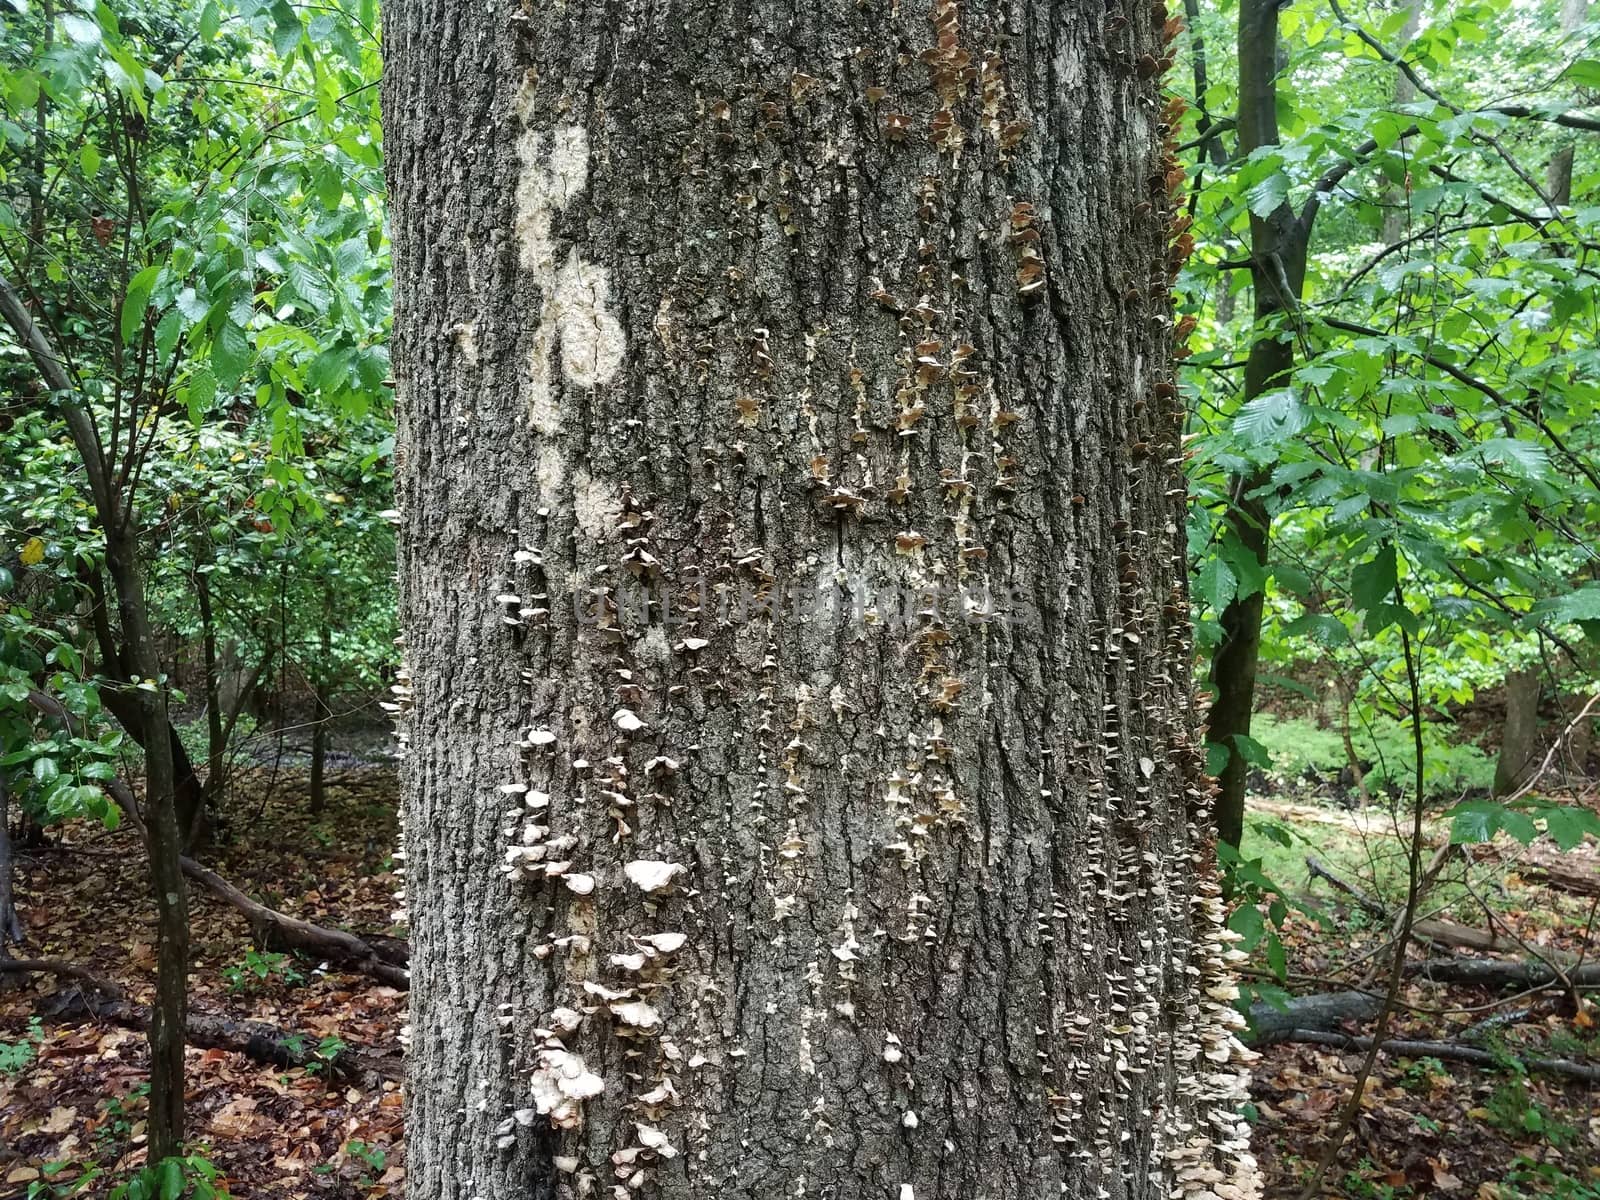 white fungus or mushrooms on tree trunk bark by stockphotofan1